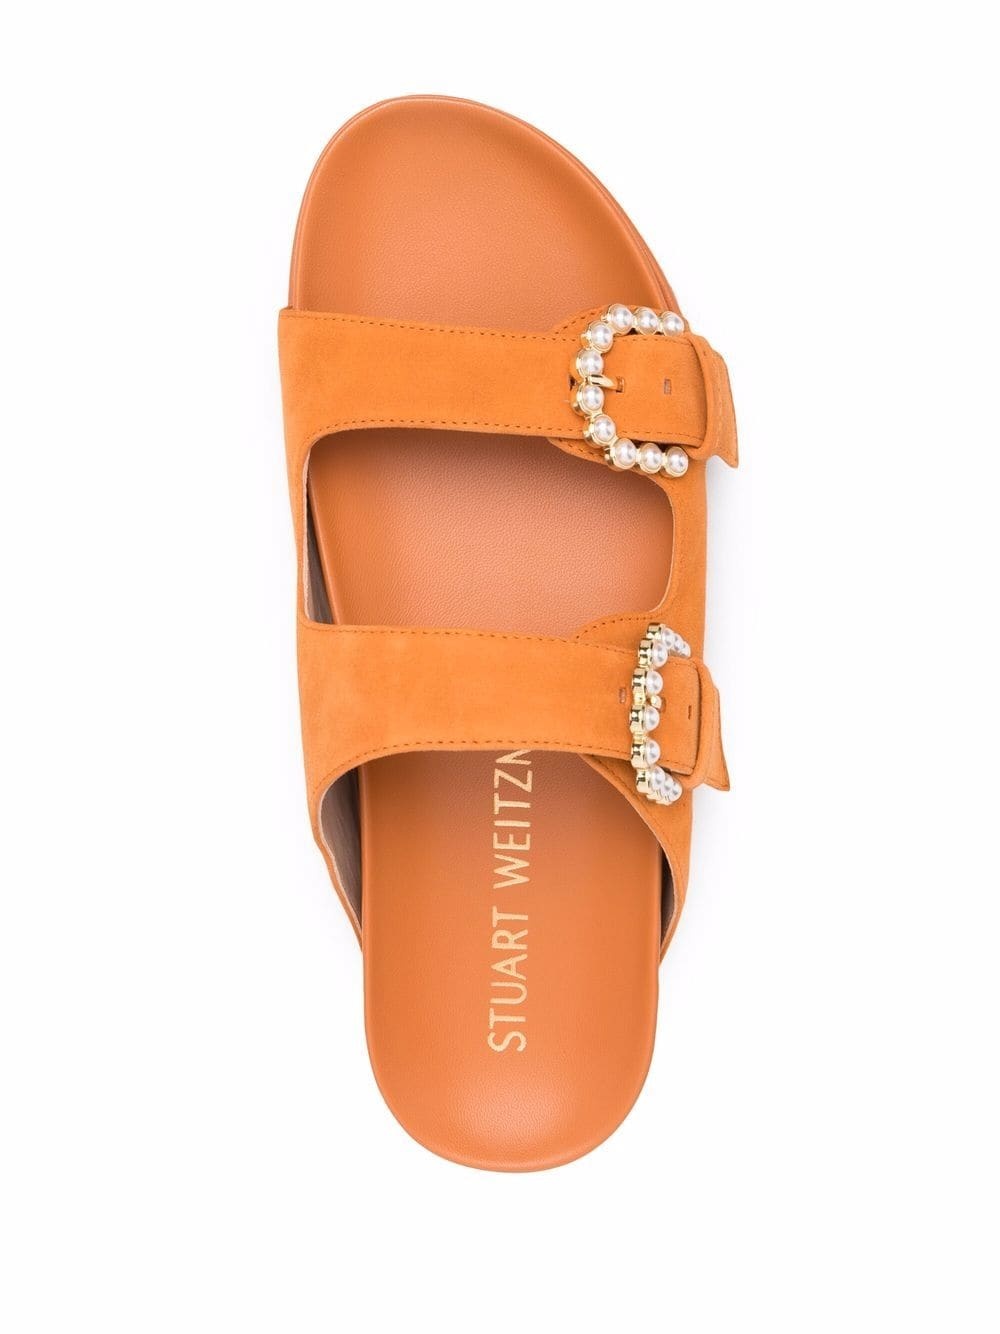 pearl-embellished suede sandals - 4